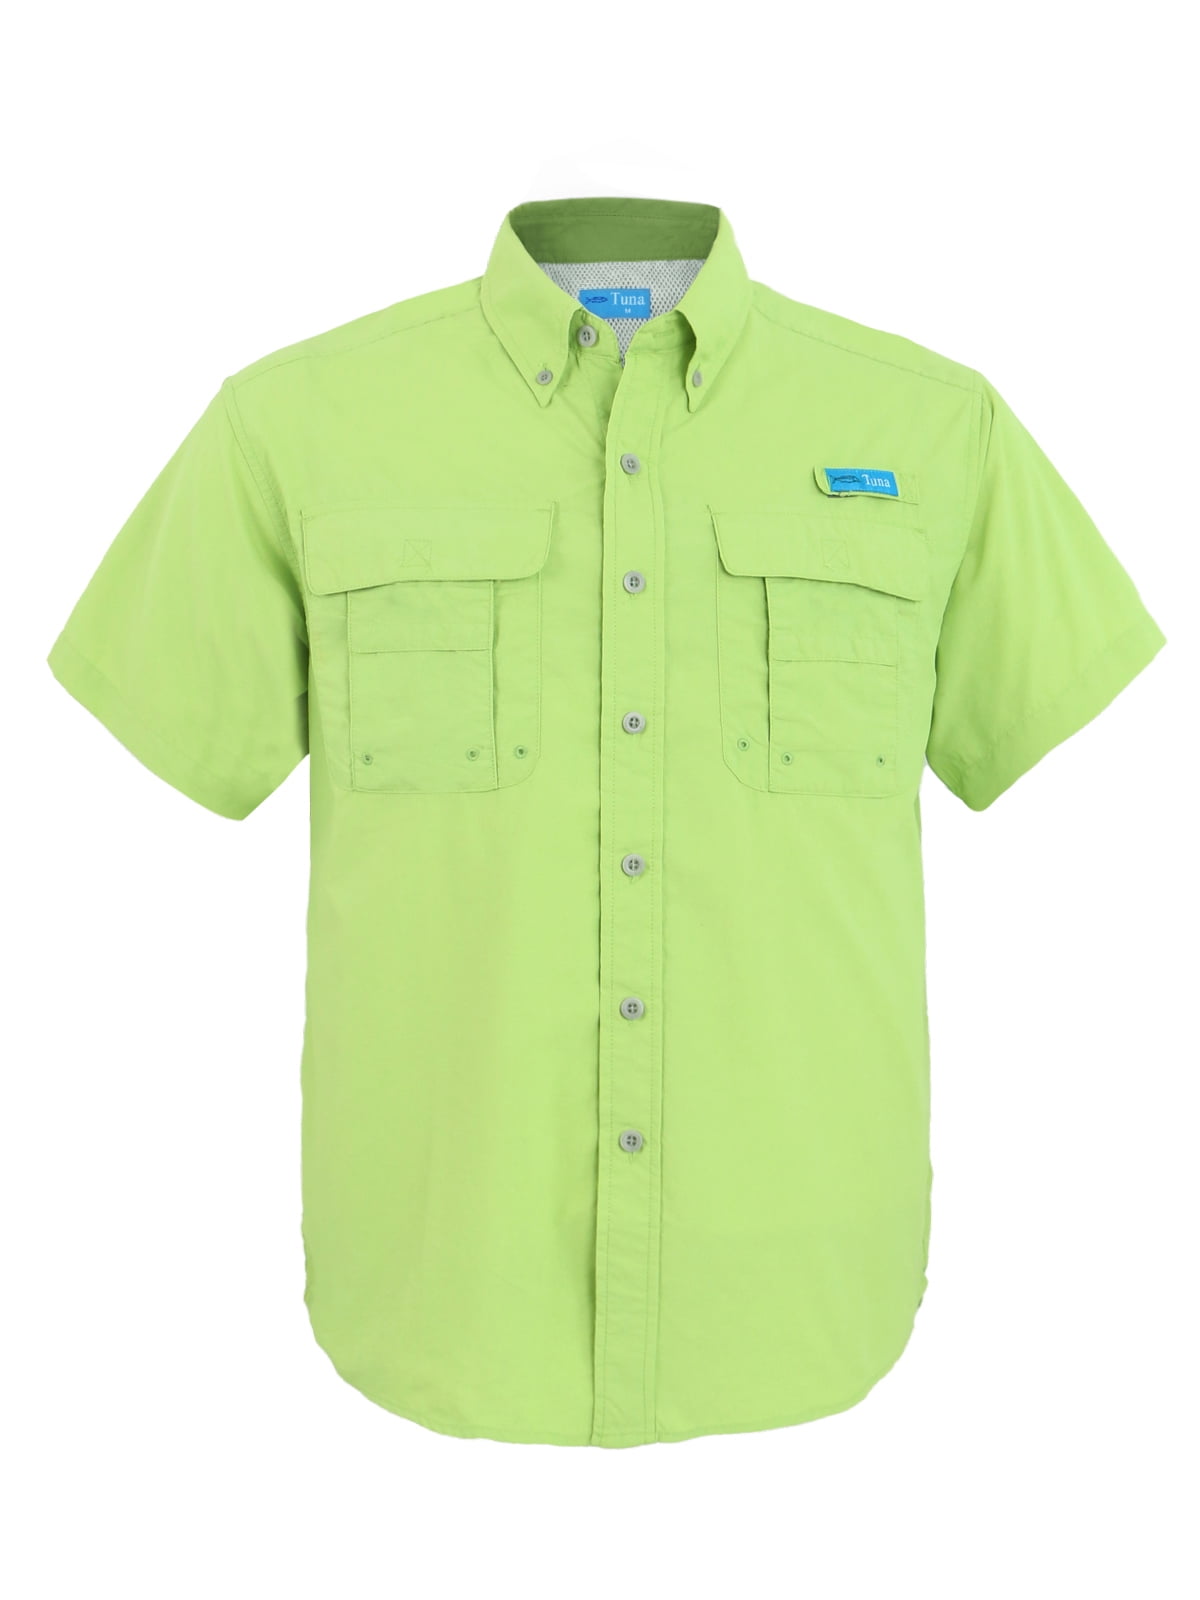 Outdoor Shirts PELAGIC Fishing Shirts Short-sleeve Men Clothes Performance  UPF50 Sun Protection Shirt Breathable Outdoor Sport Fis197k